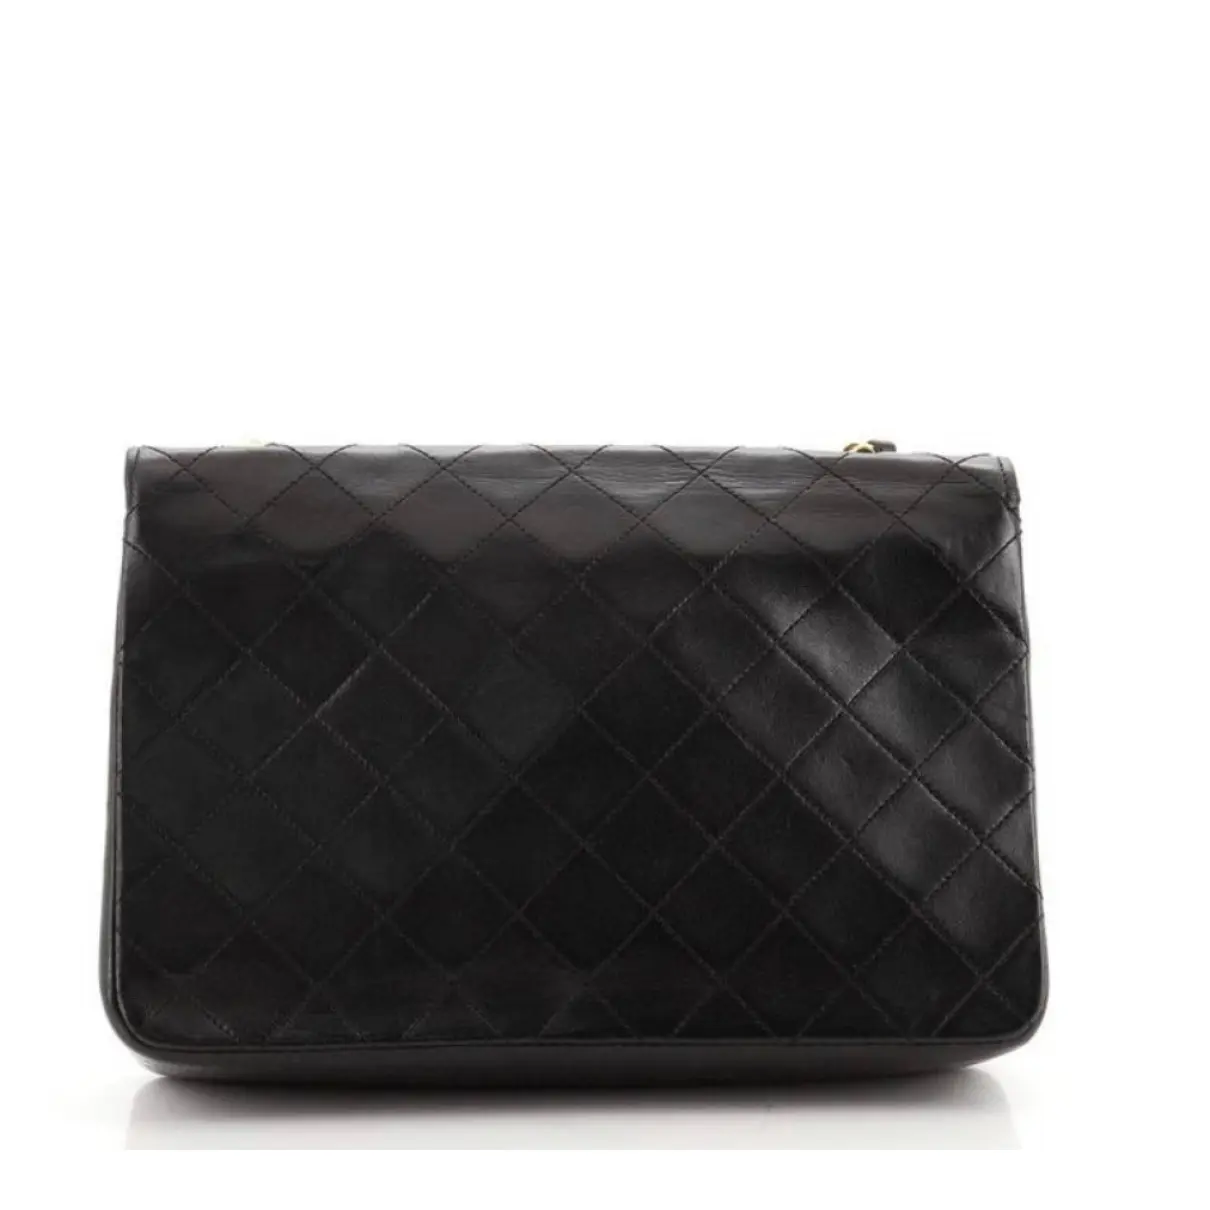 Buy Chanel Vintage CC Chain leather handbag online - Vintage